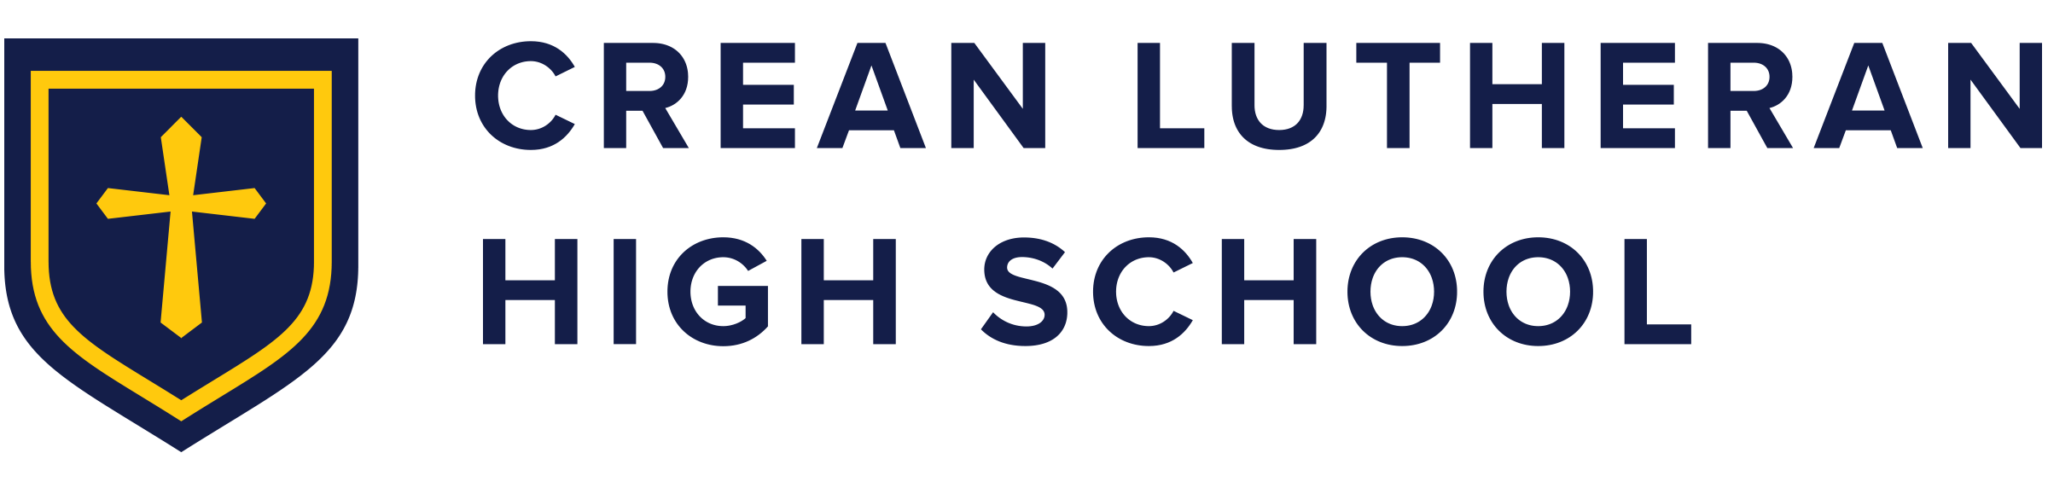 crean-lutheran-high-school-sapphire-at-school